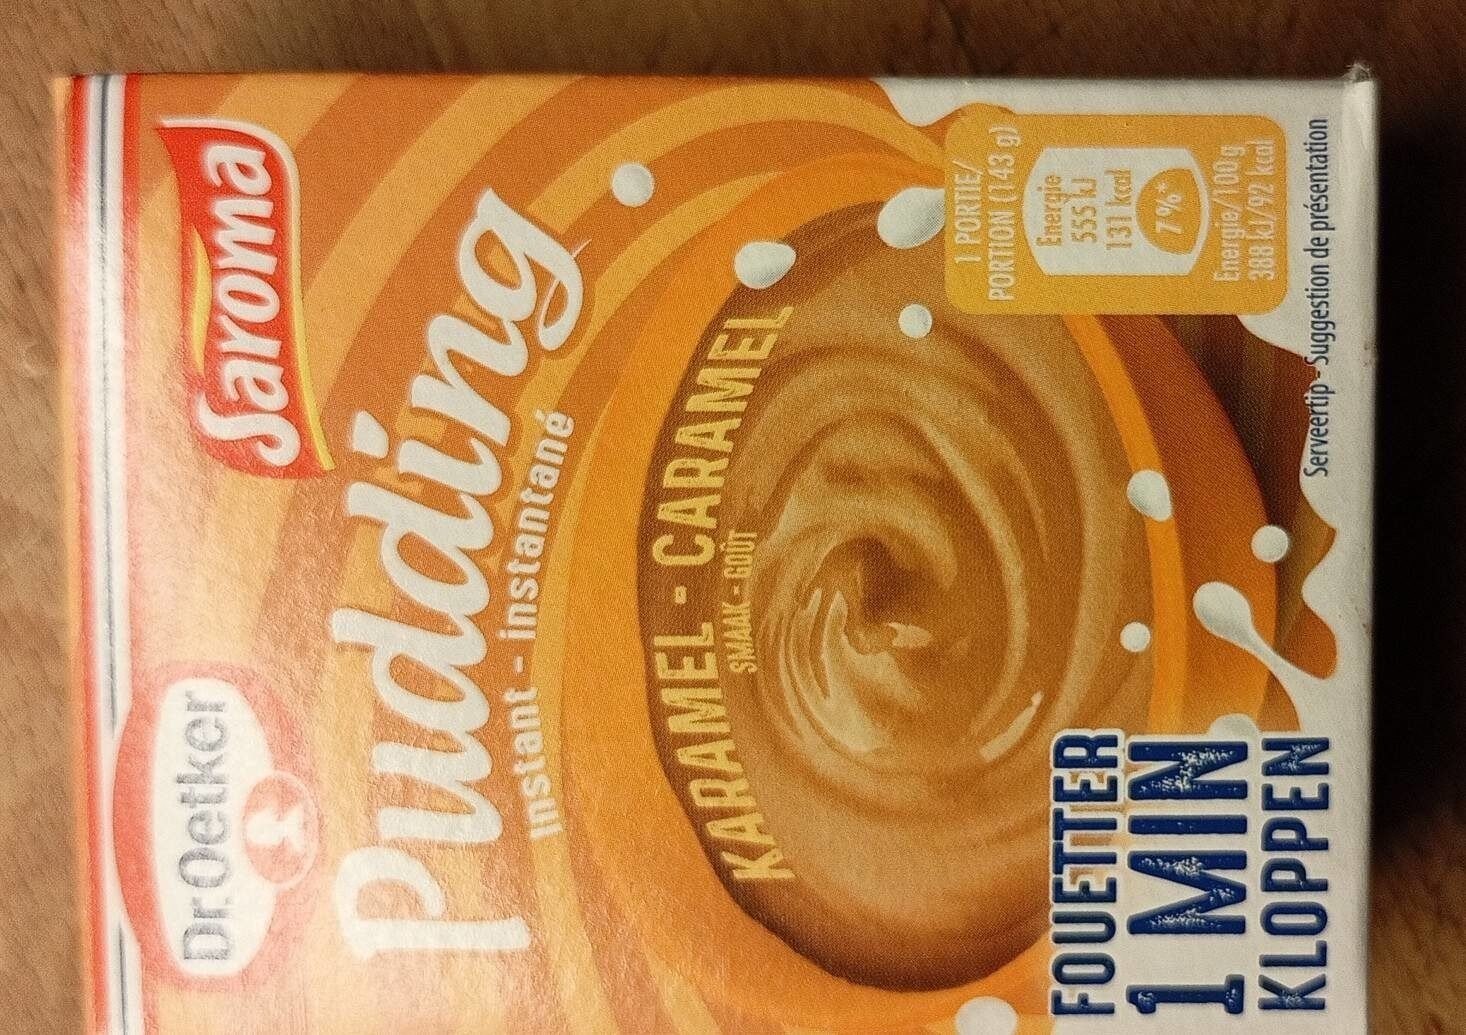 Pudding saroma dr oetker caramel - Product - fr